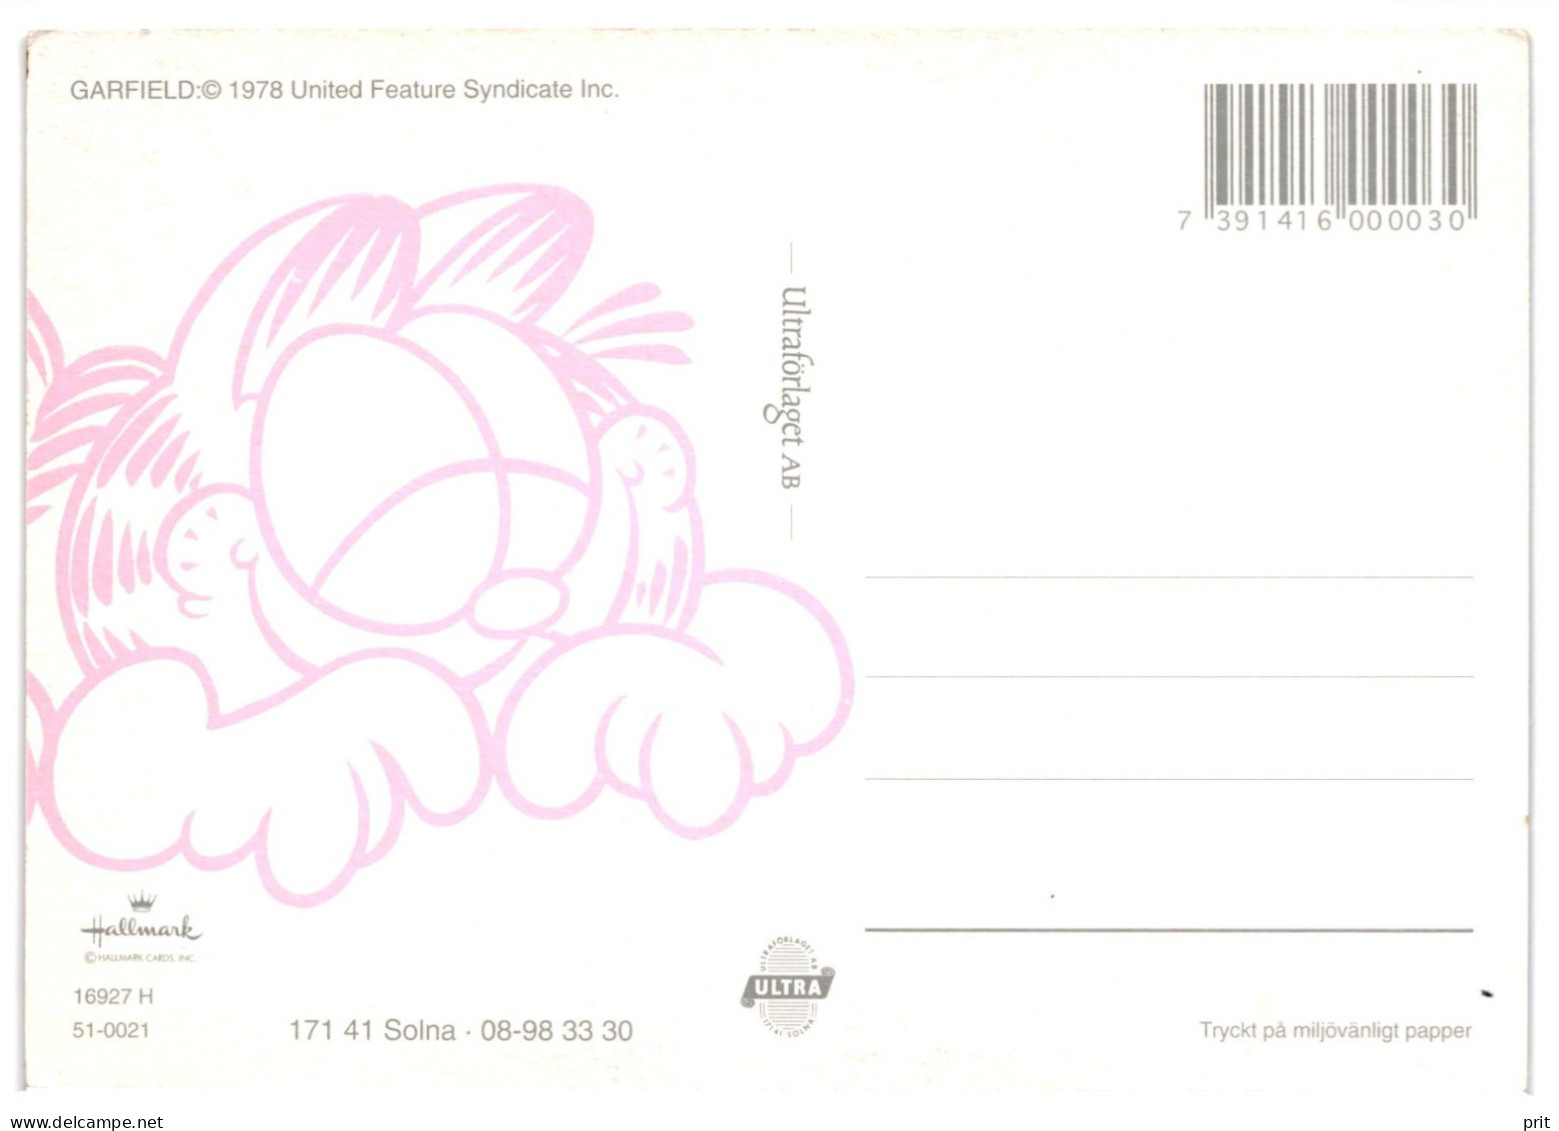 Garfield The Cat Unused Postcard By Jim Davis. "My Heart Belongs To You" Publisher Ultraförlaget AB Sweden - Comics